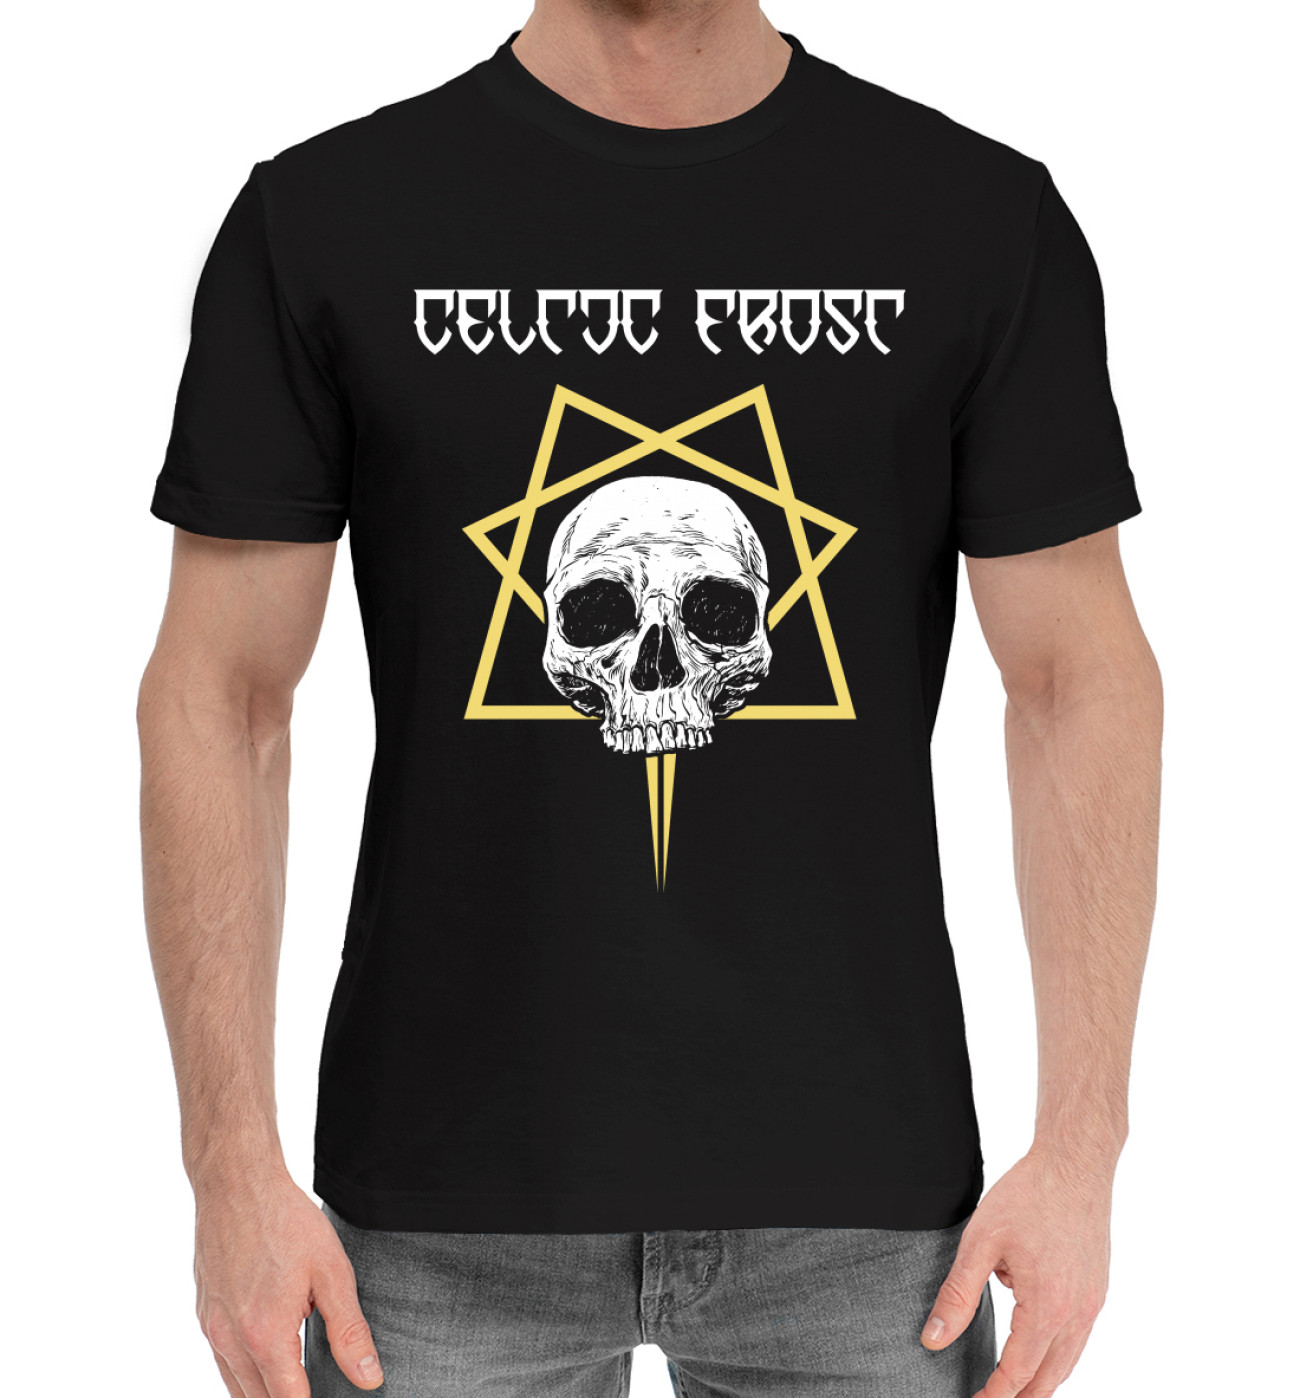 Мужская Хлопковая футболка Celtic Frost, артикул: BLK-352908-hfu-2